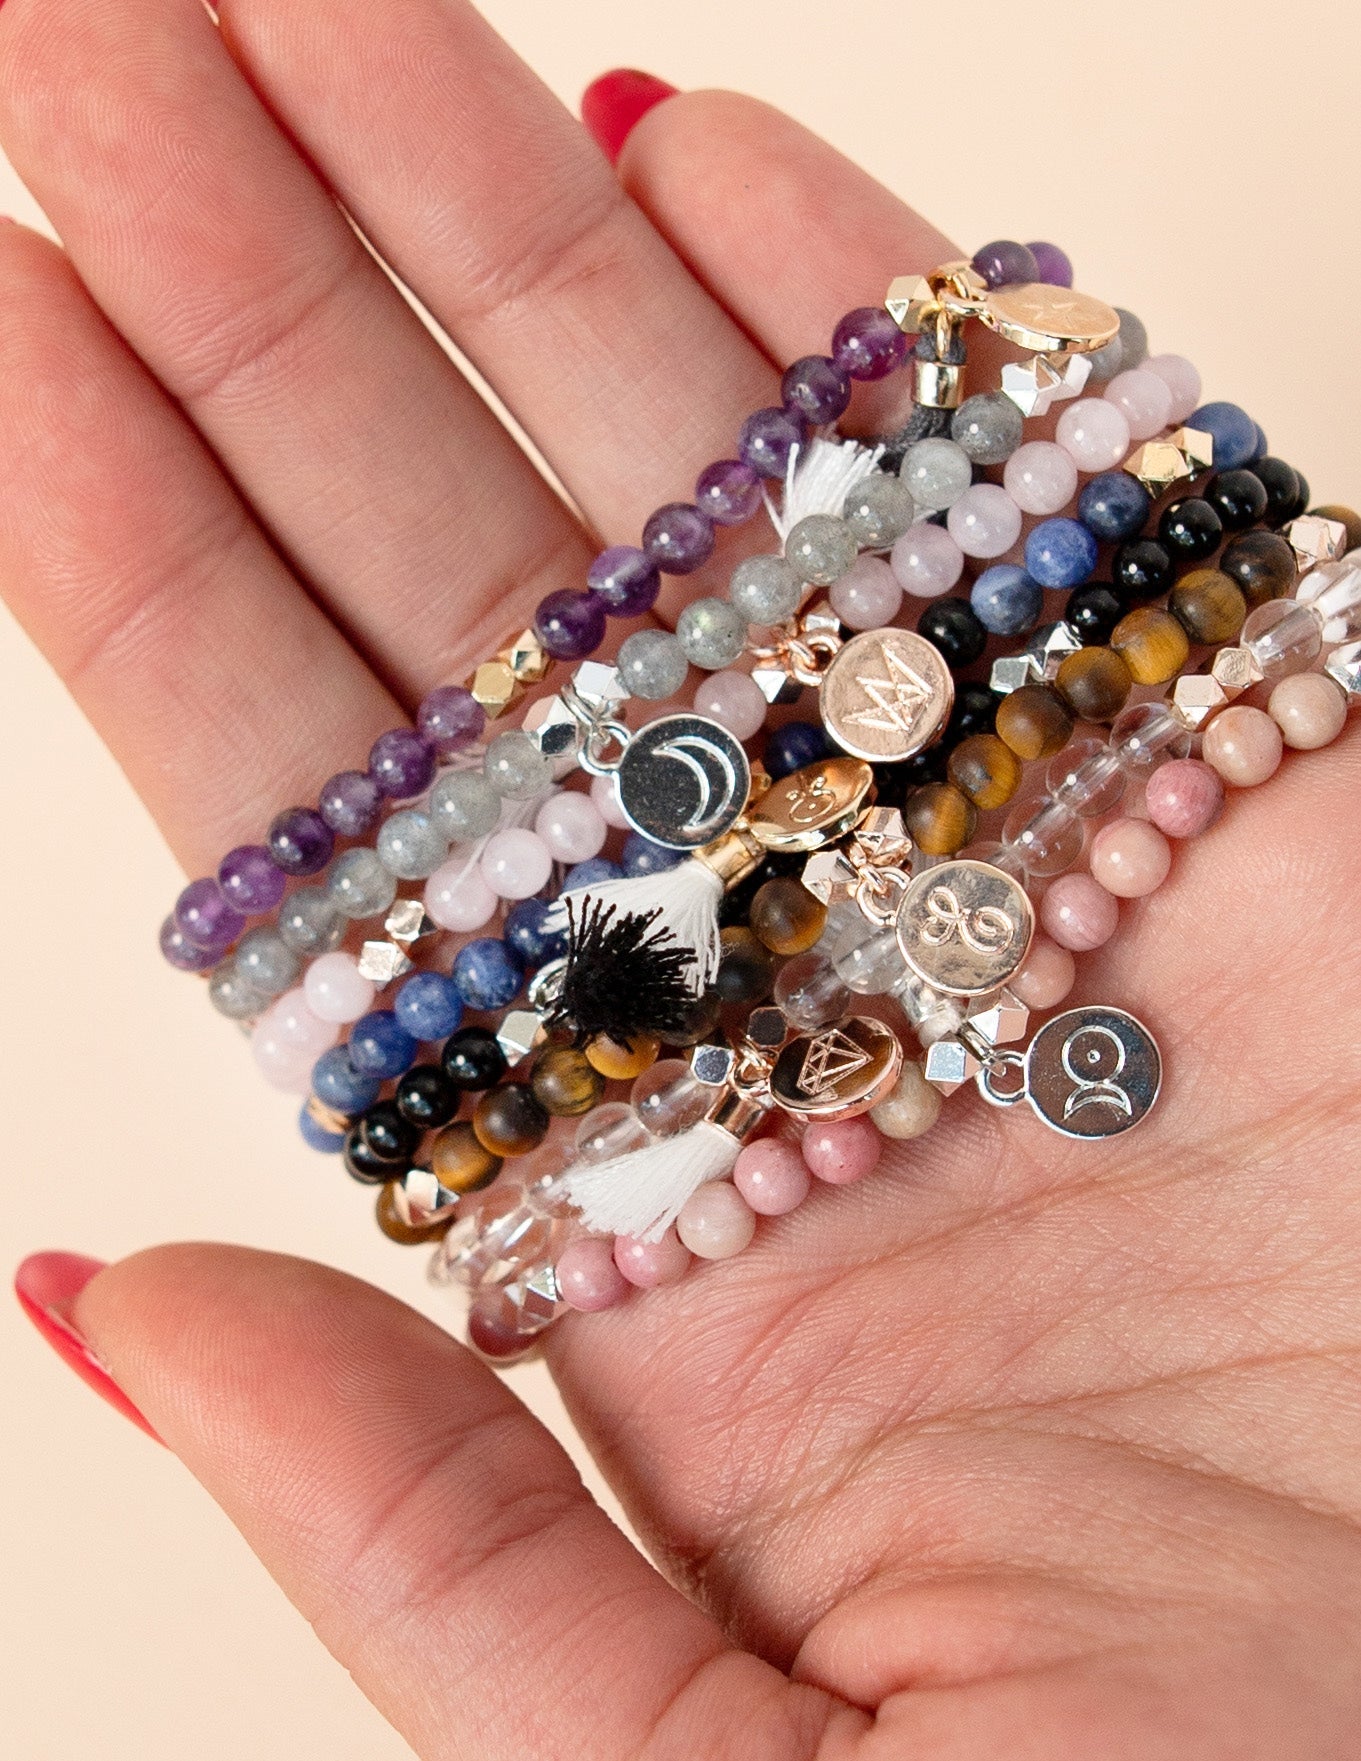 Natural Gemstone Diffusing Rank Bracelets - Put on Love Designs